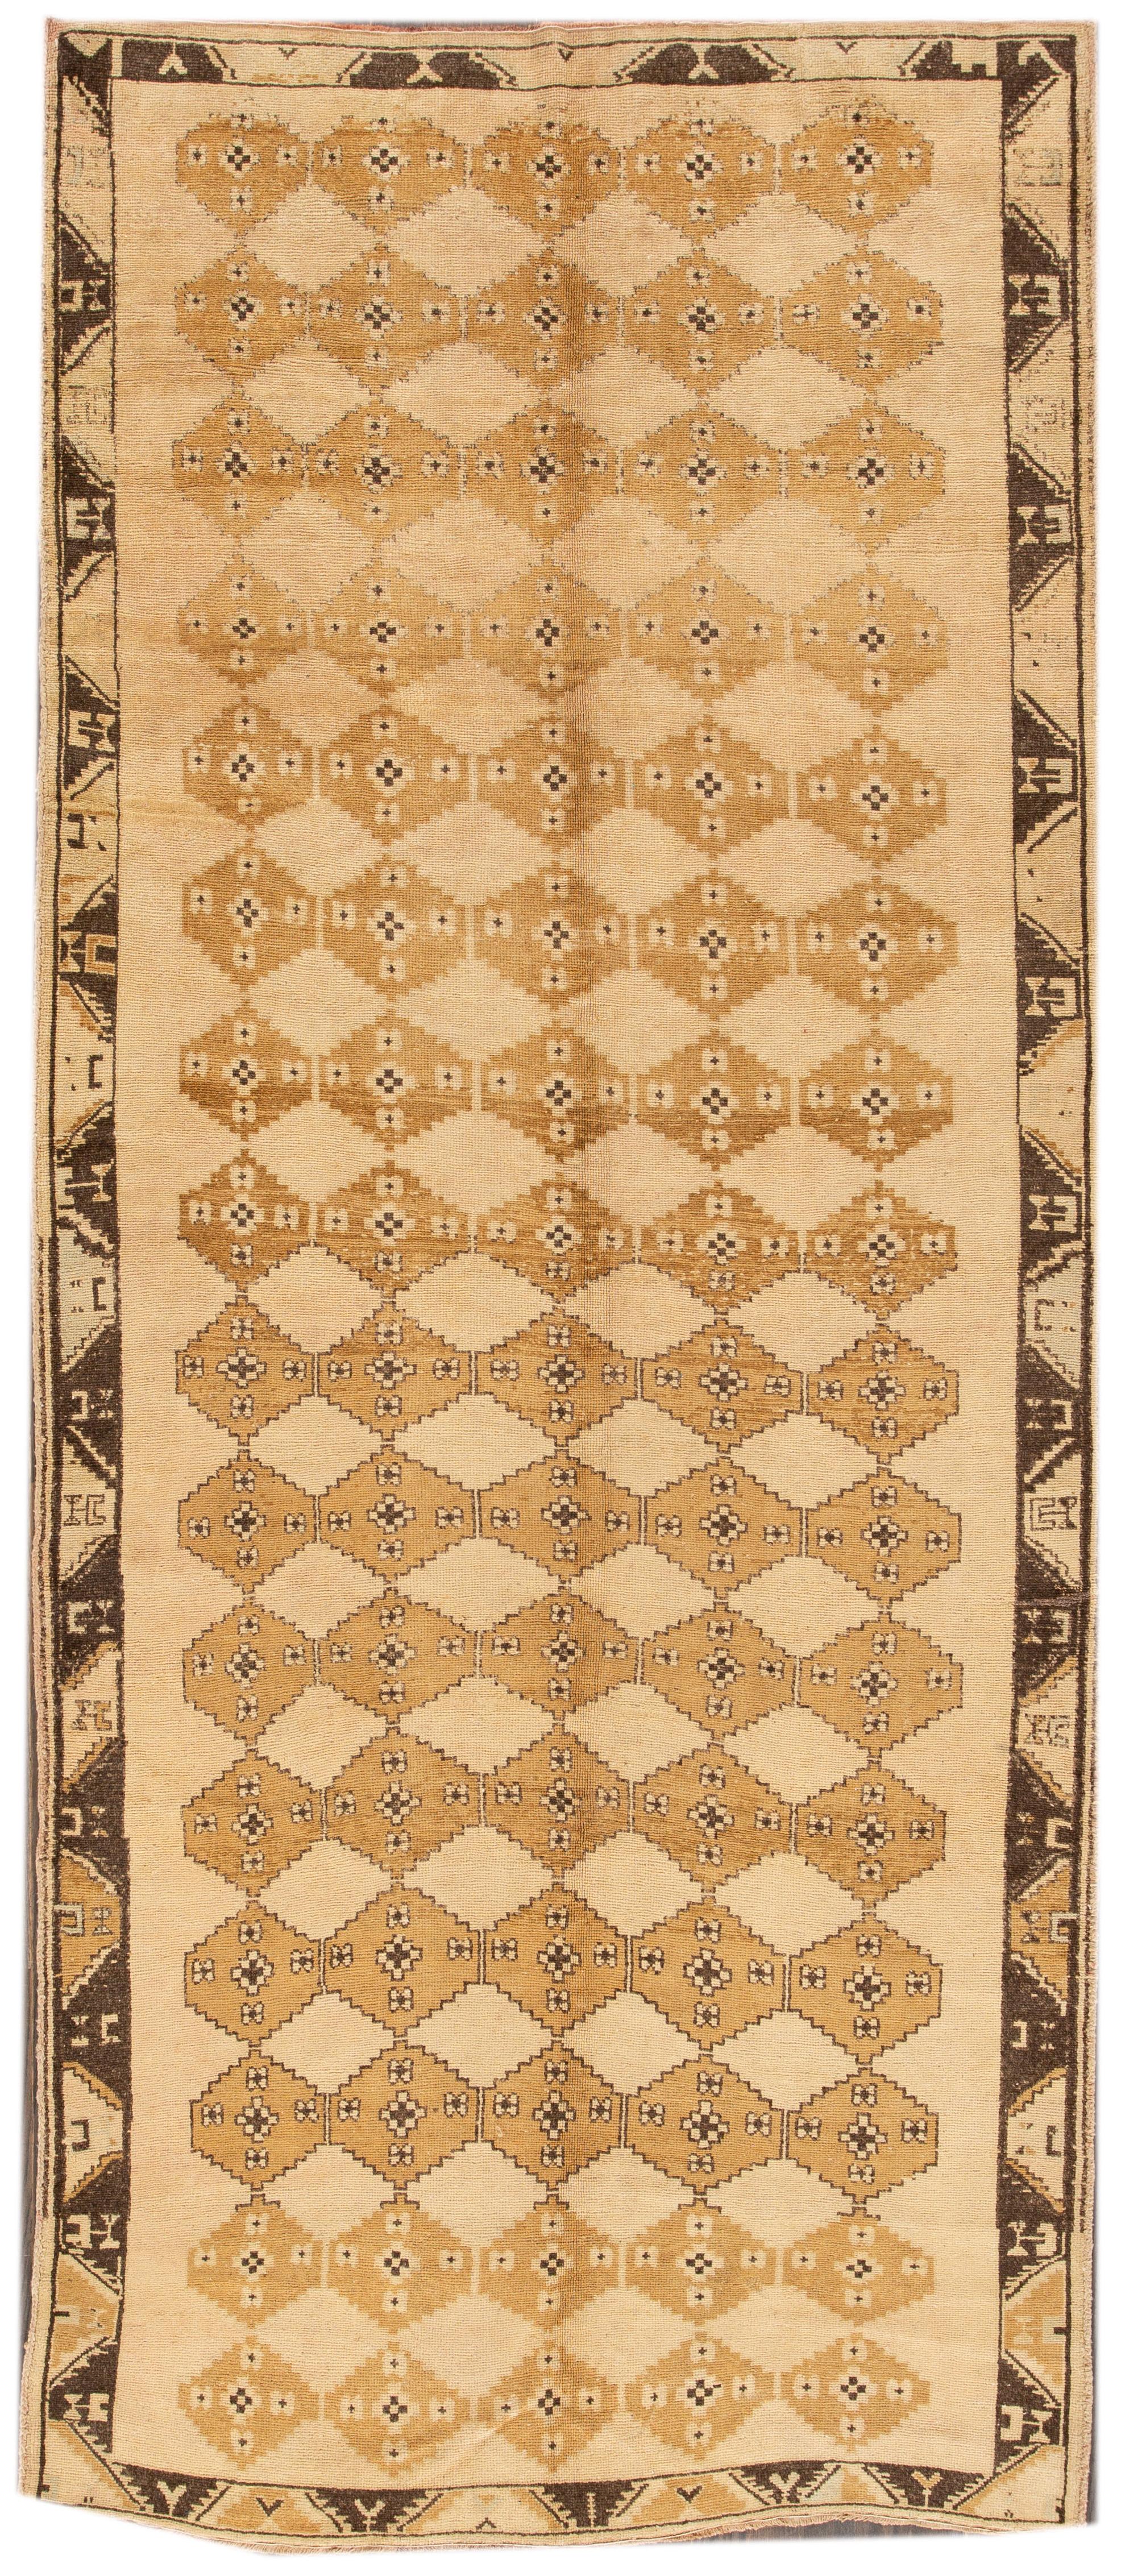 19th-Century Antique Khotan Handmade Geometric Beige Wool Rug